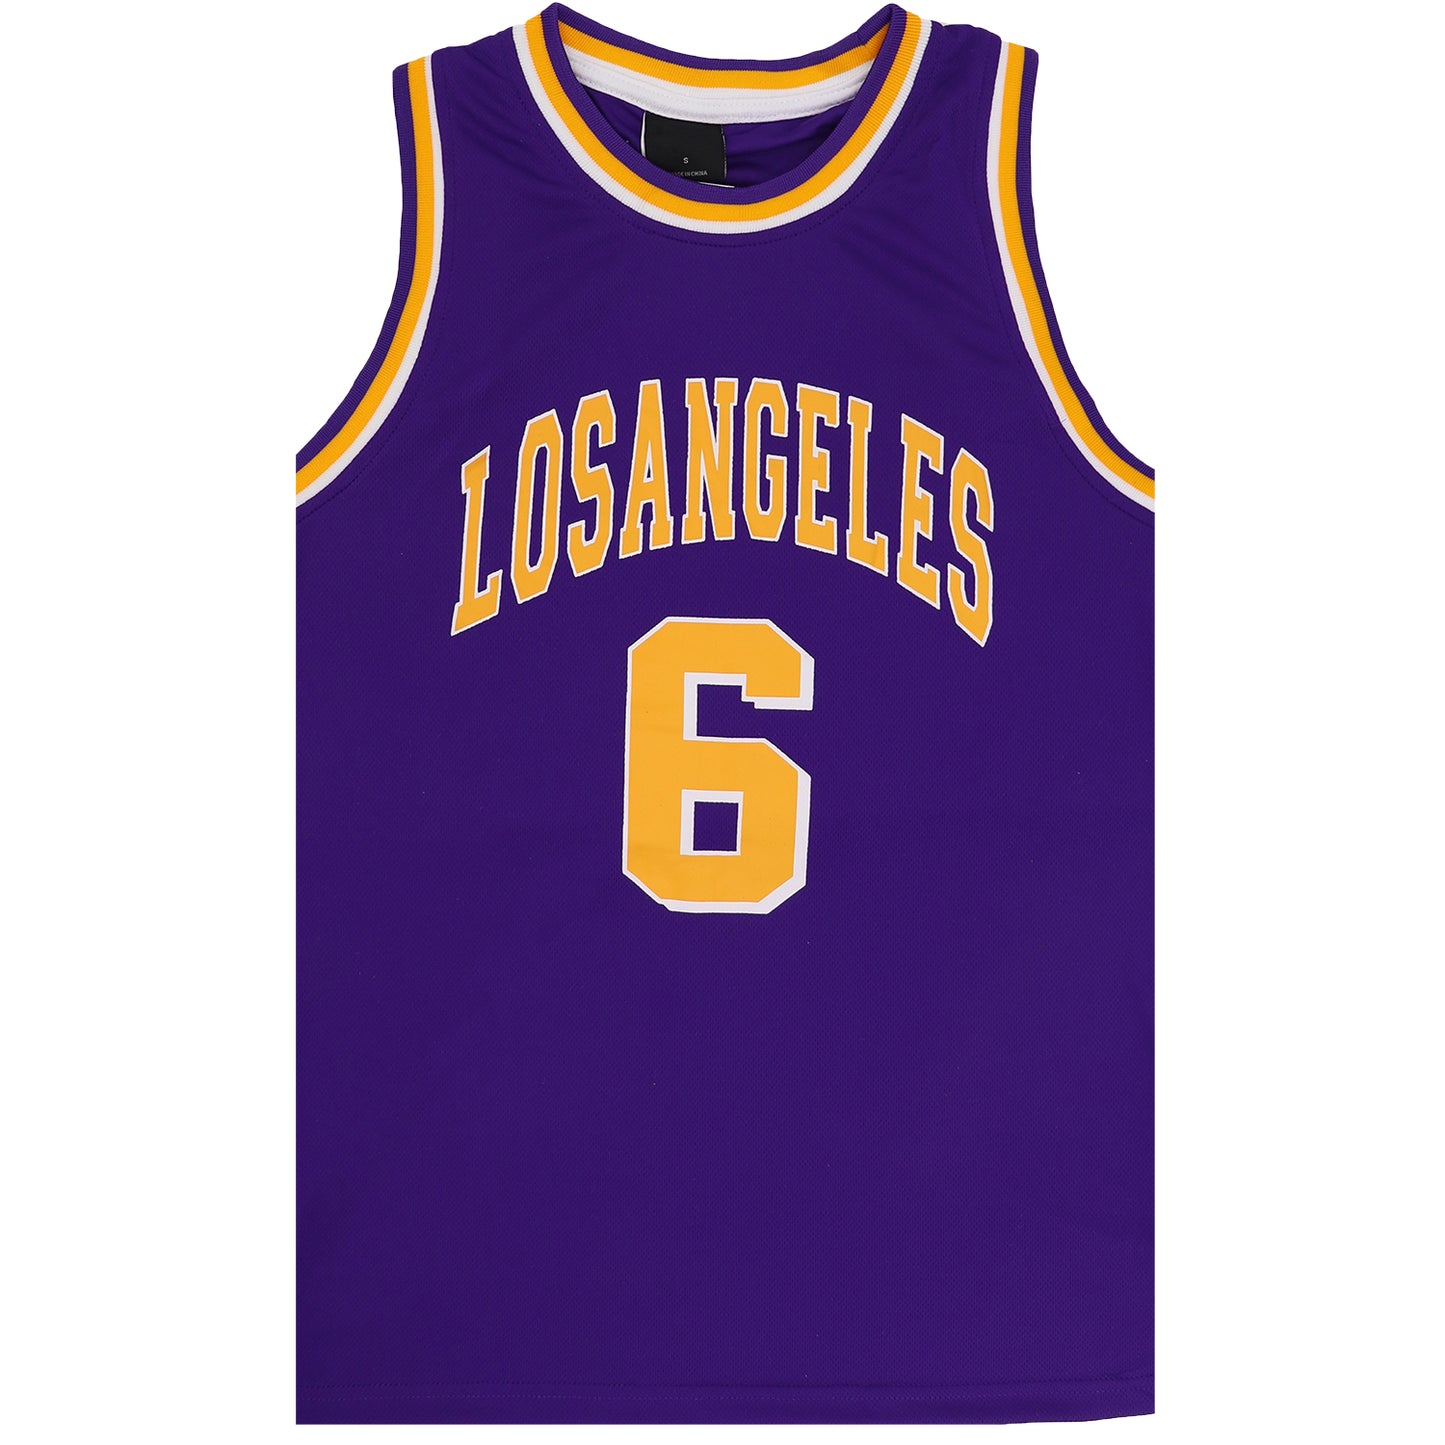 Kid's Basketball Jersey Tank Boys Sports T Shirt Tee Singlet Tops Los Angeles, Yellow - Los Angeles 6, 4